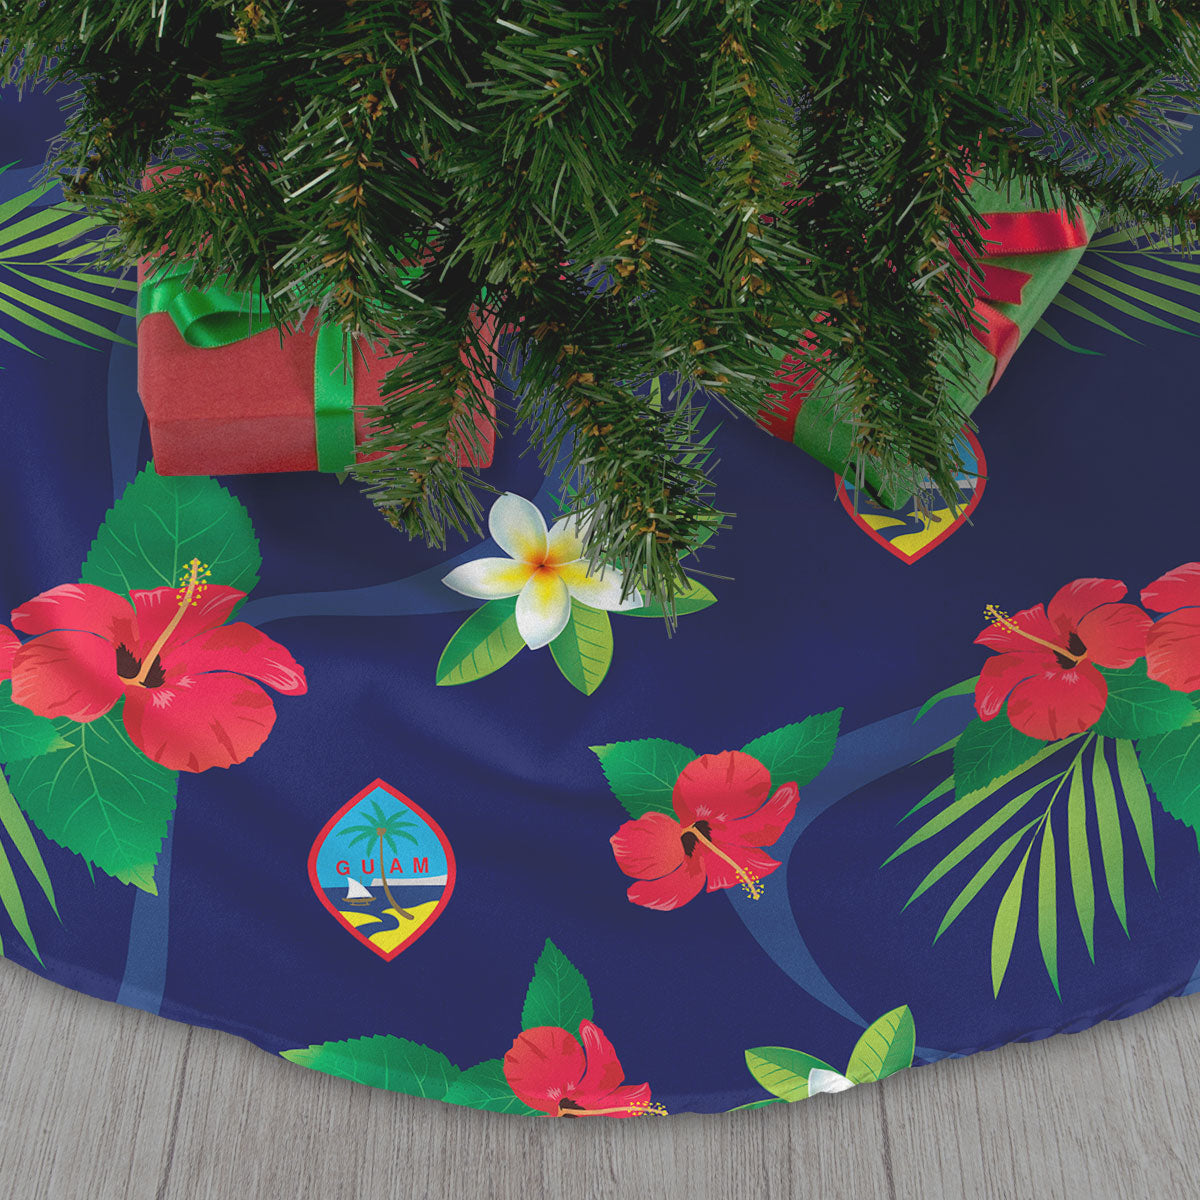 Guam Flag Flowers Christmas Tree Skirt